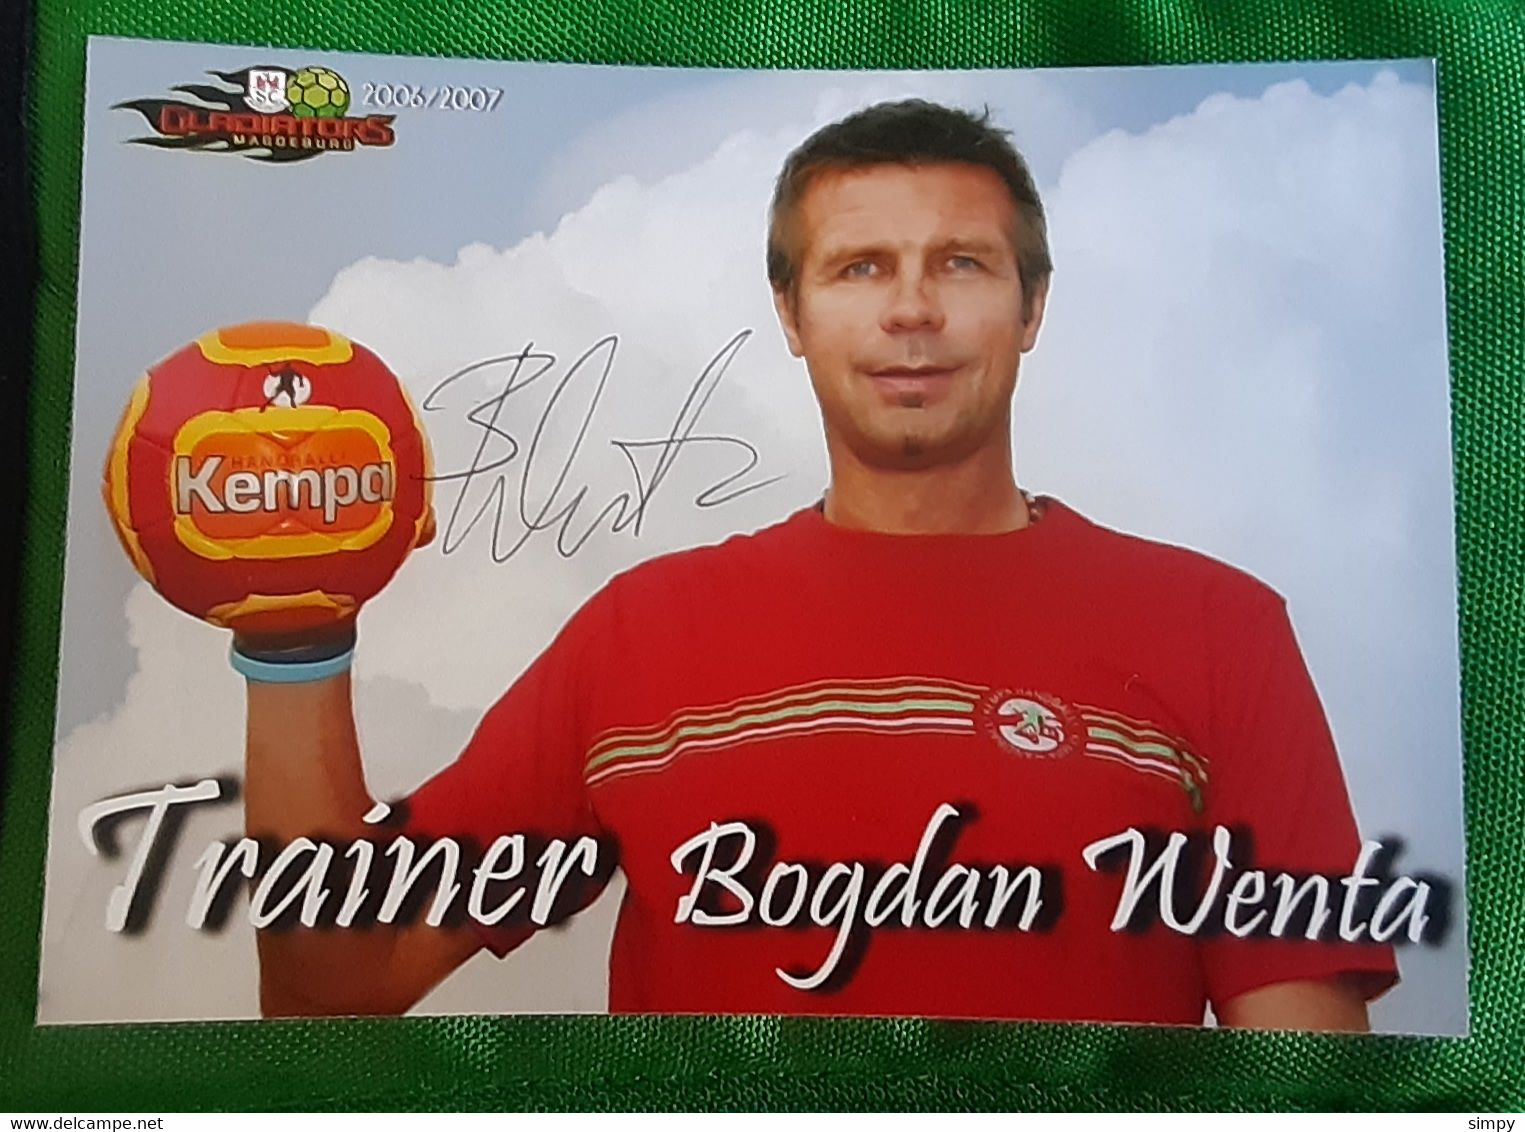 BOGDAN WENTA Poland Trainer Handball Card With Autograph Handball Club Magdeburg 2006/2007 Germany - Handball